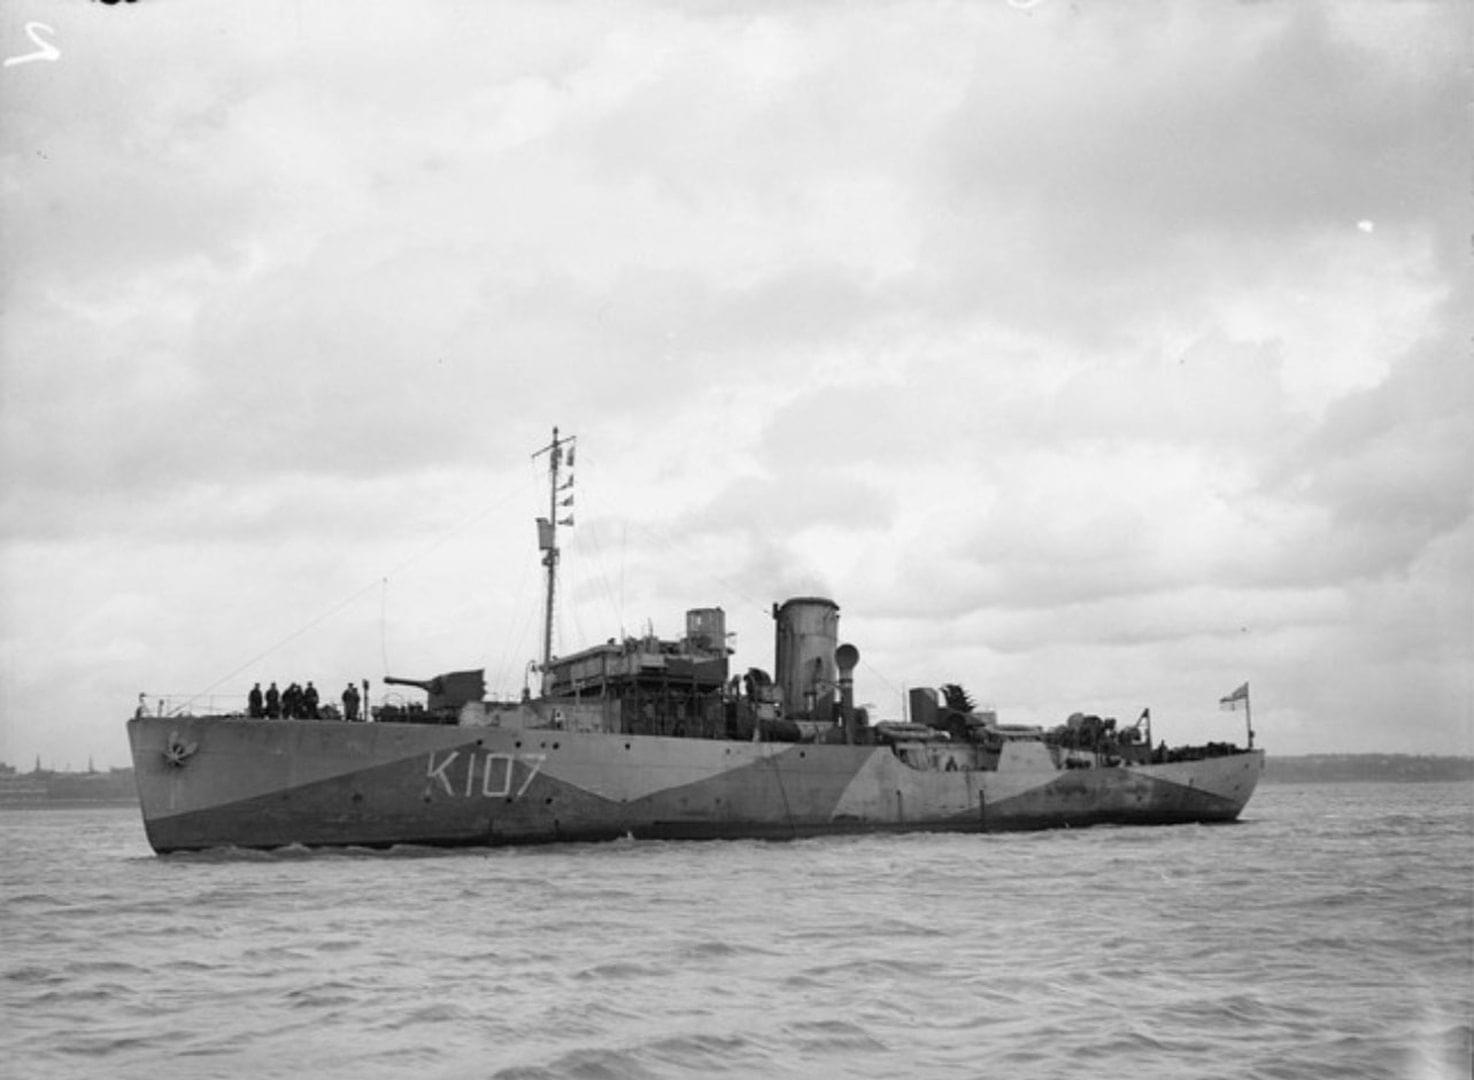 HMS Nasturtium wreck